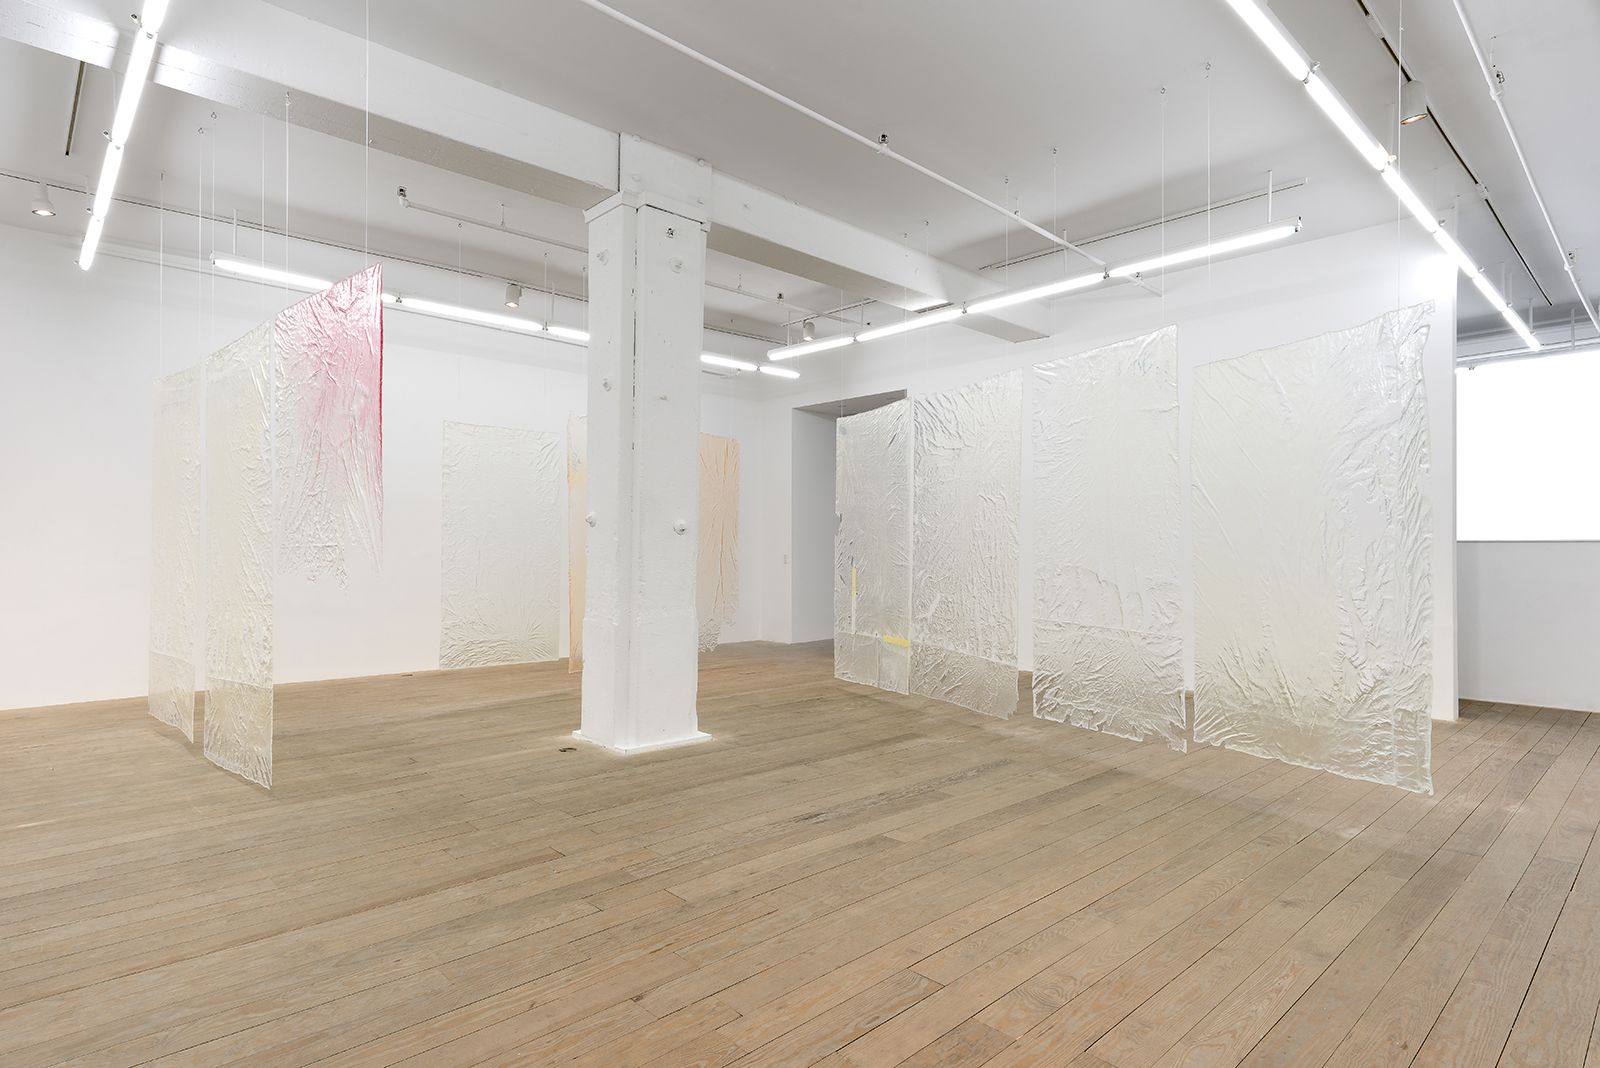 Ester Partegàs, 2015, installation view, Foxy Production, New York